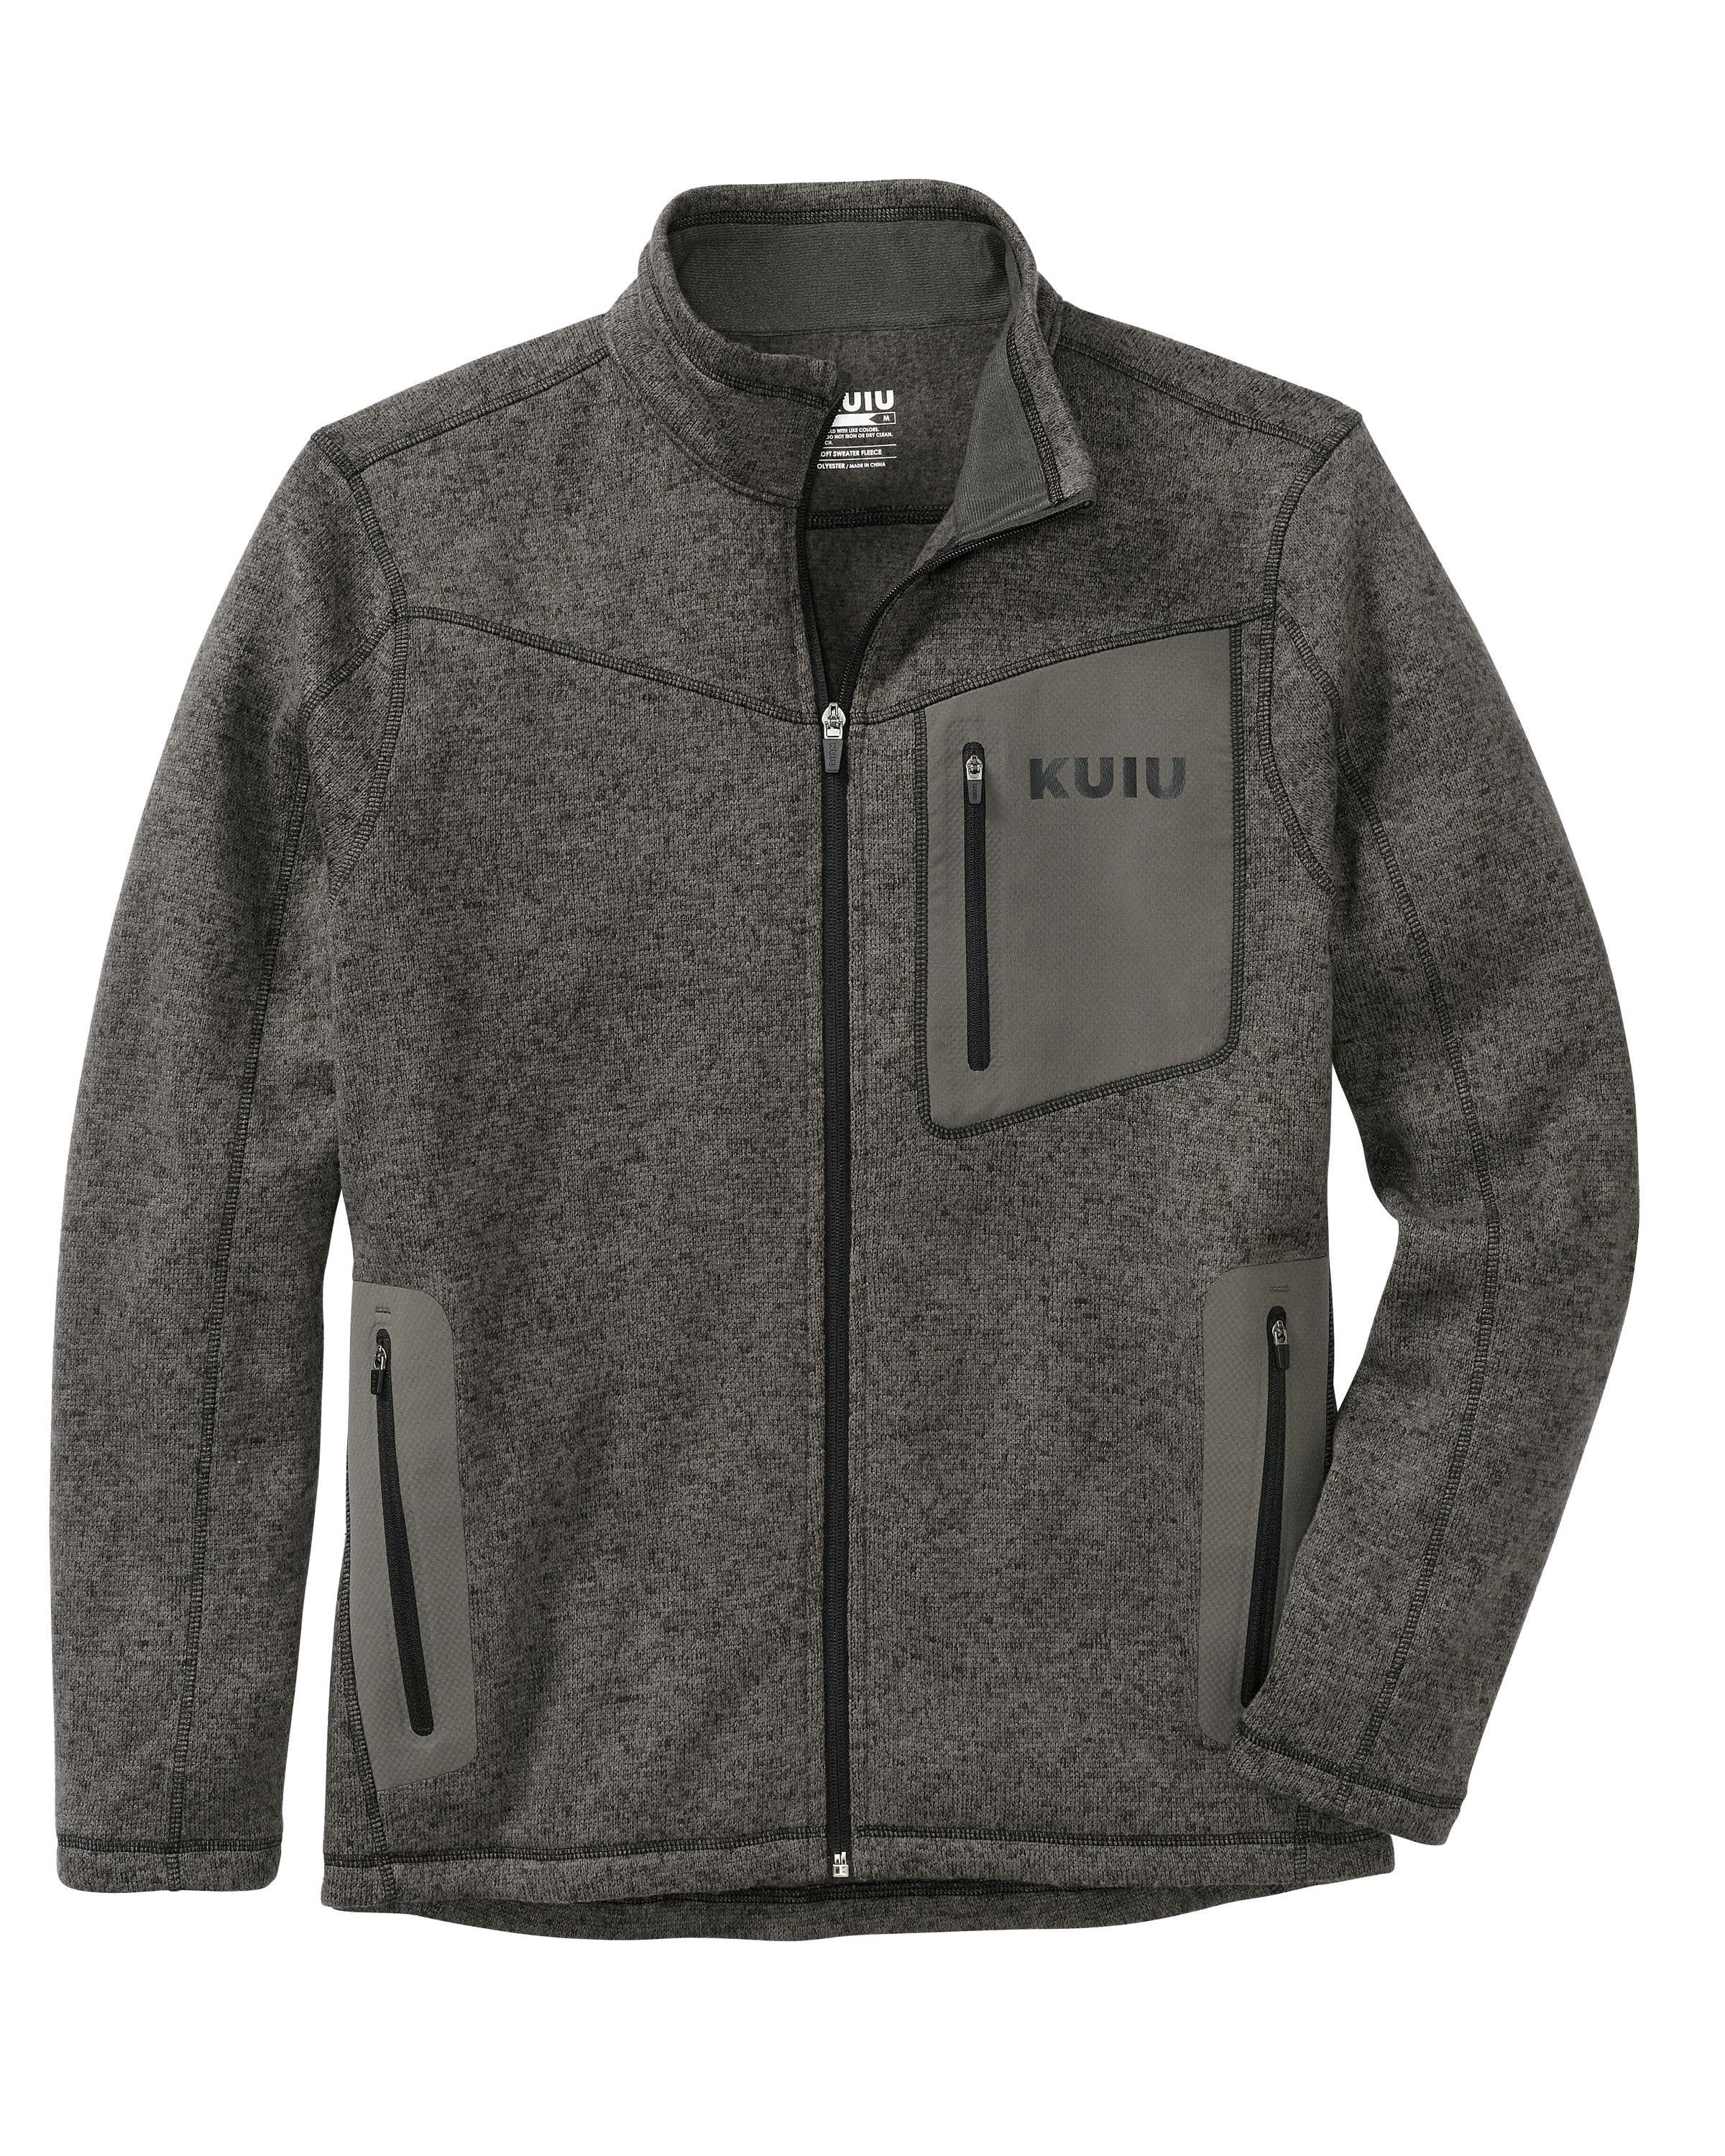 KUIU Base Camp Full Zip Sweater in Charcoal | Size 3XL